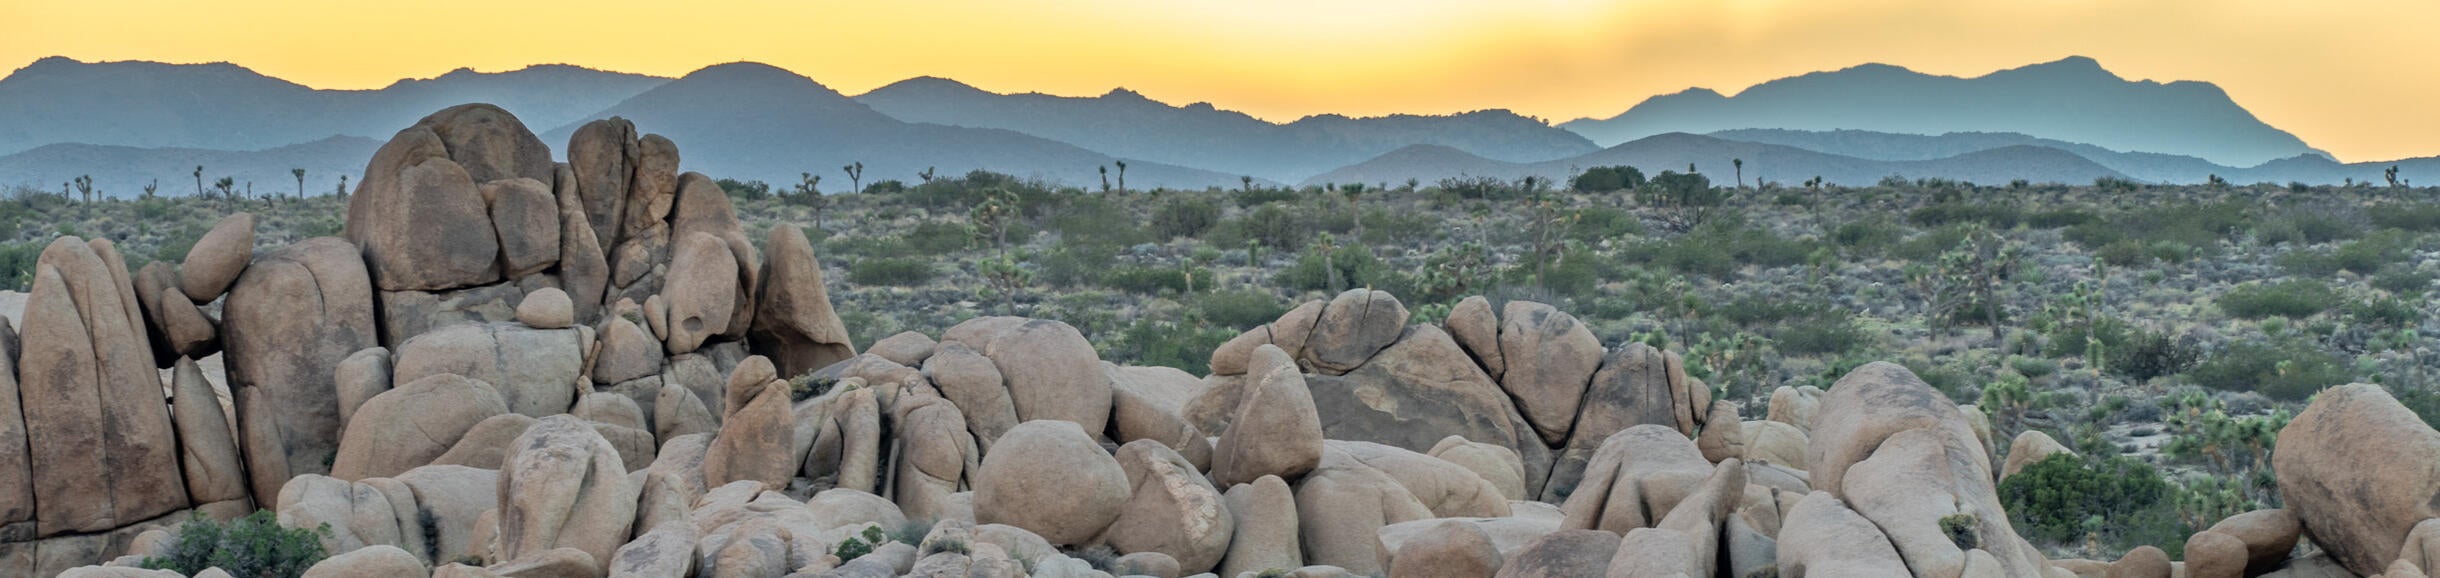 A desert landscape with rocks